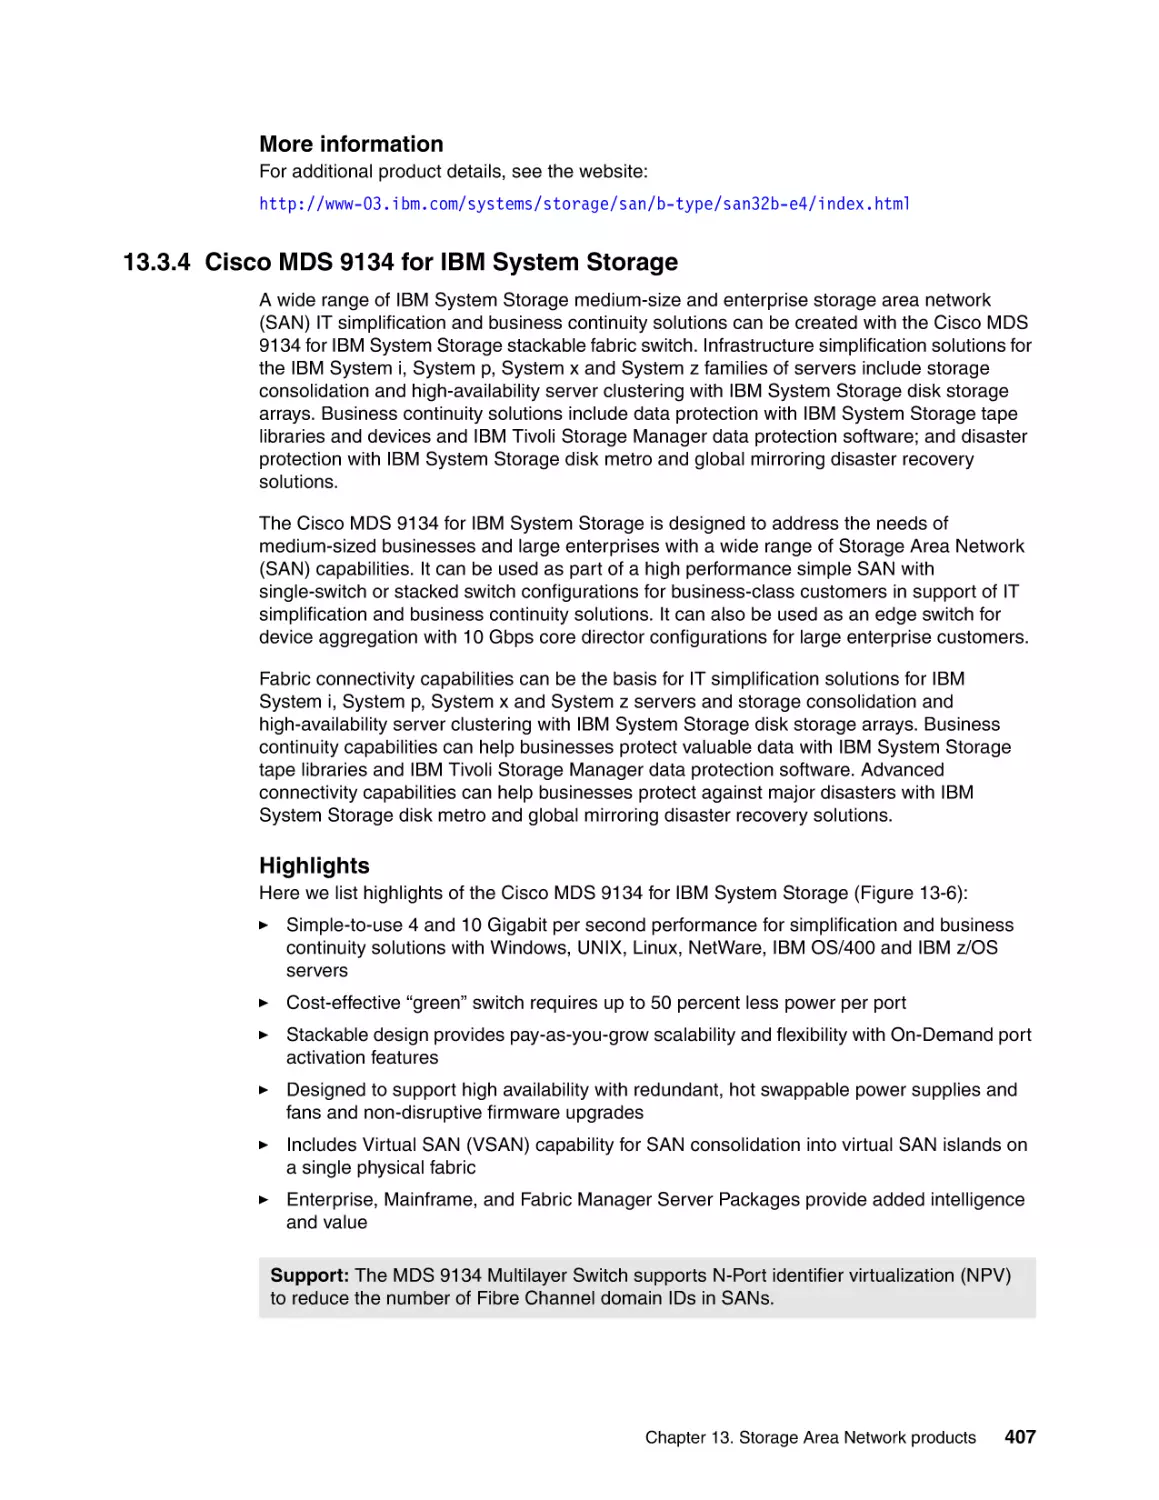 13.3.4 Cisco MDS 9134 for IBM System Storage